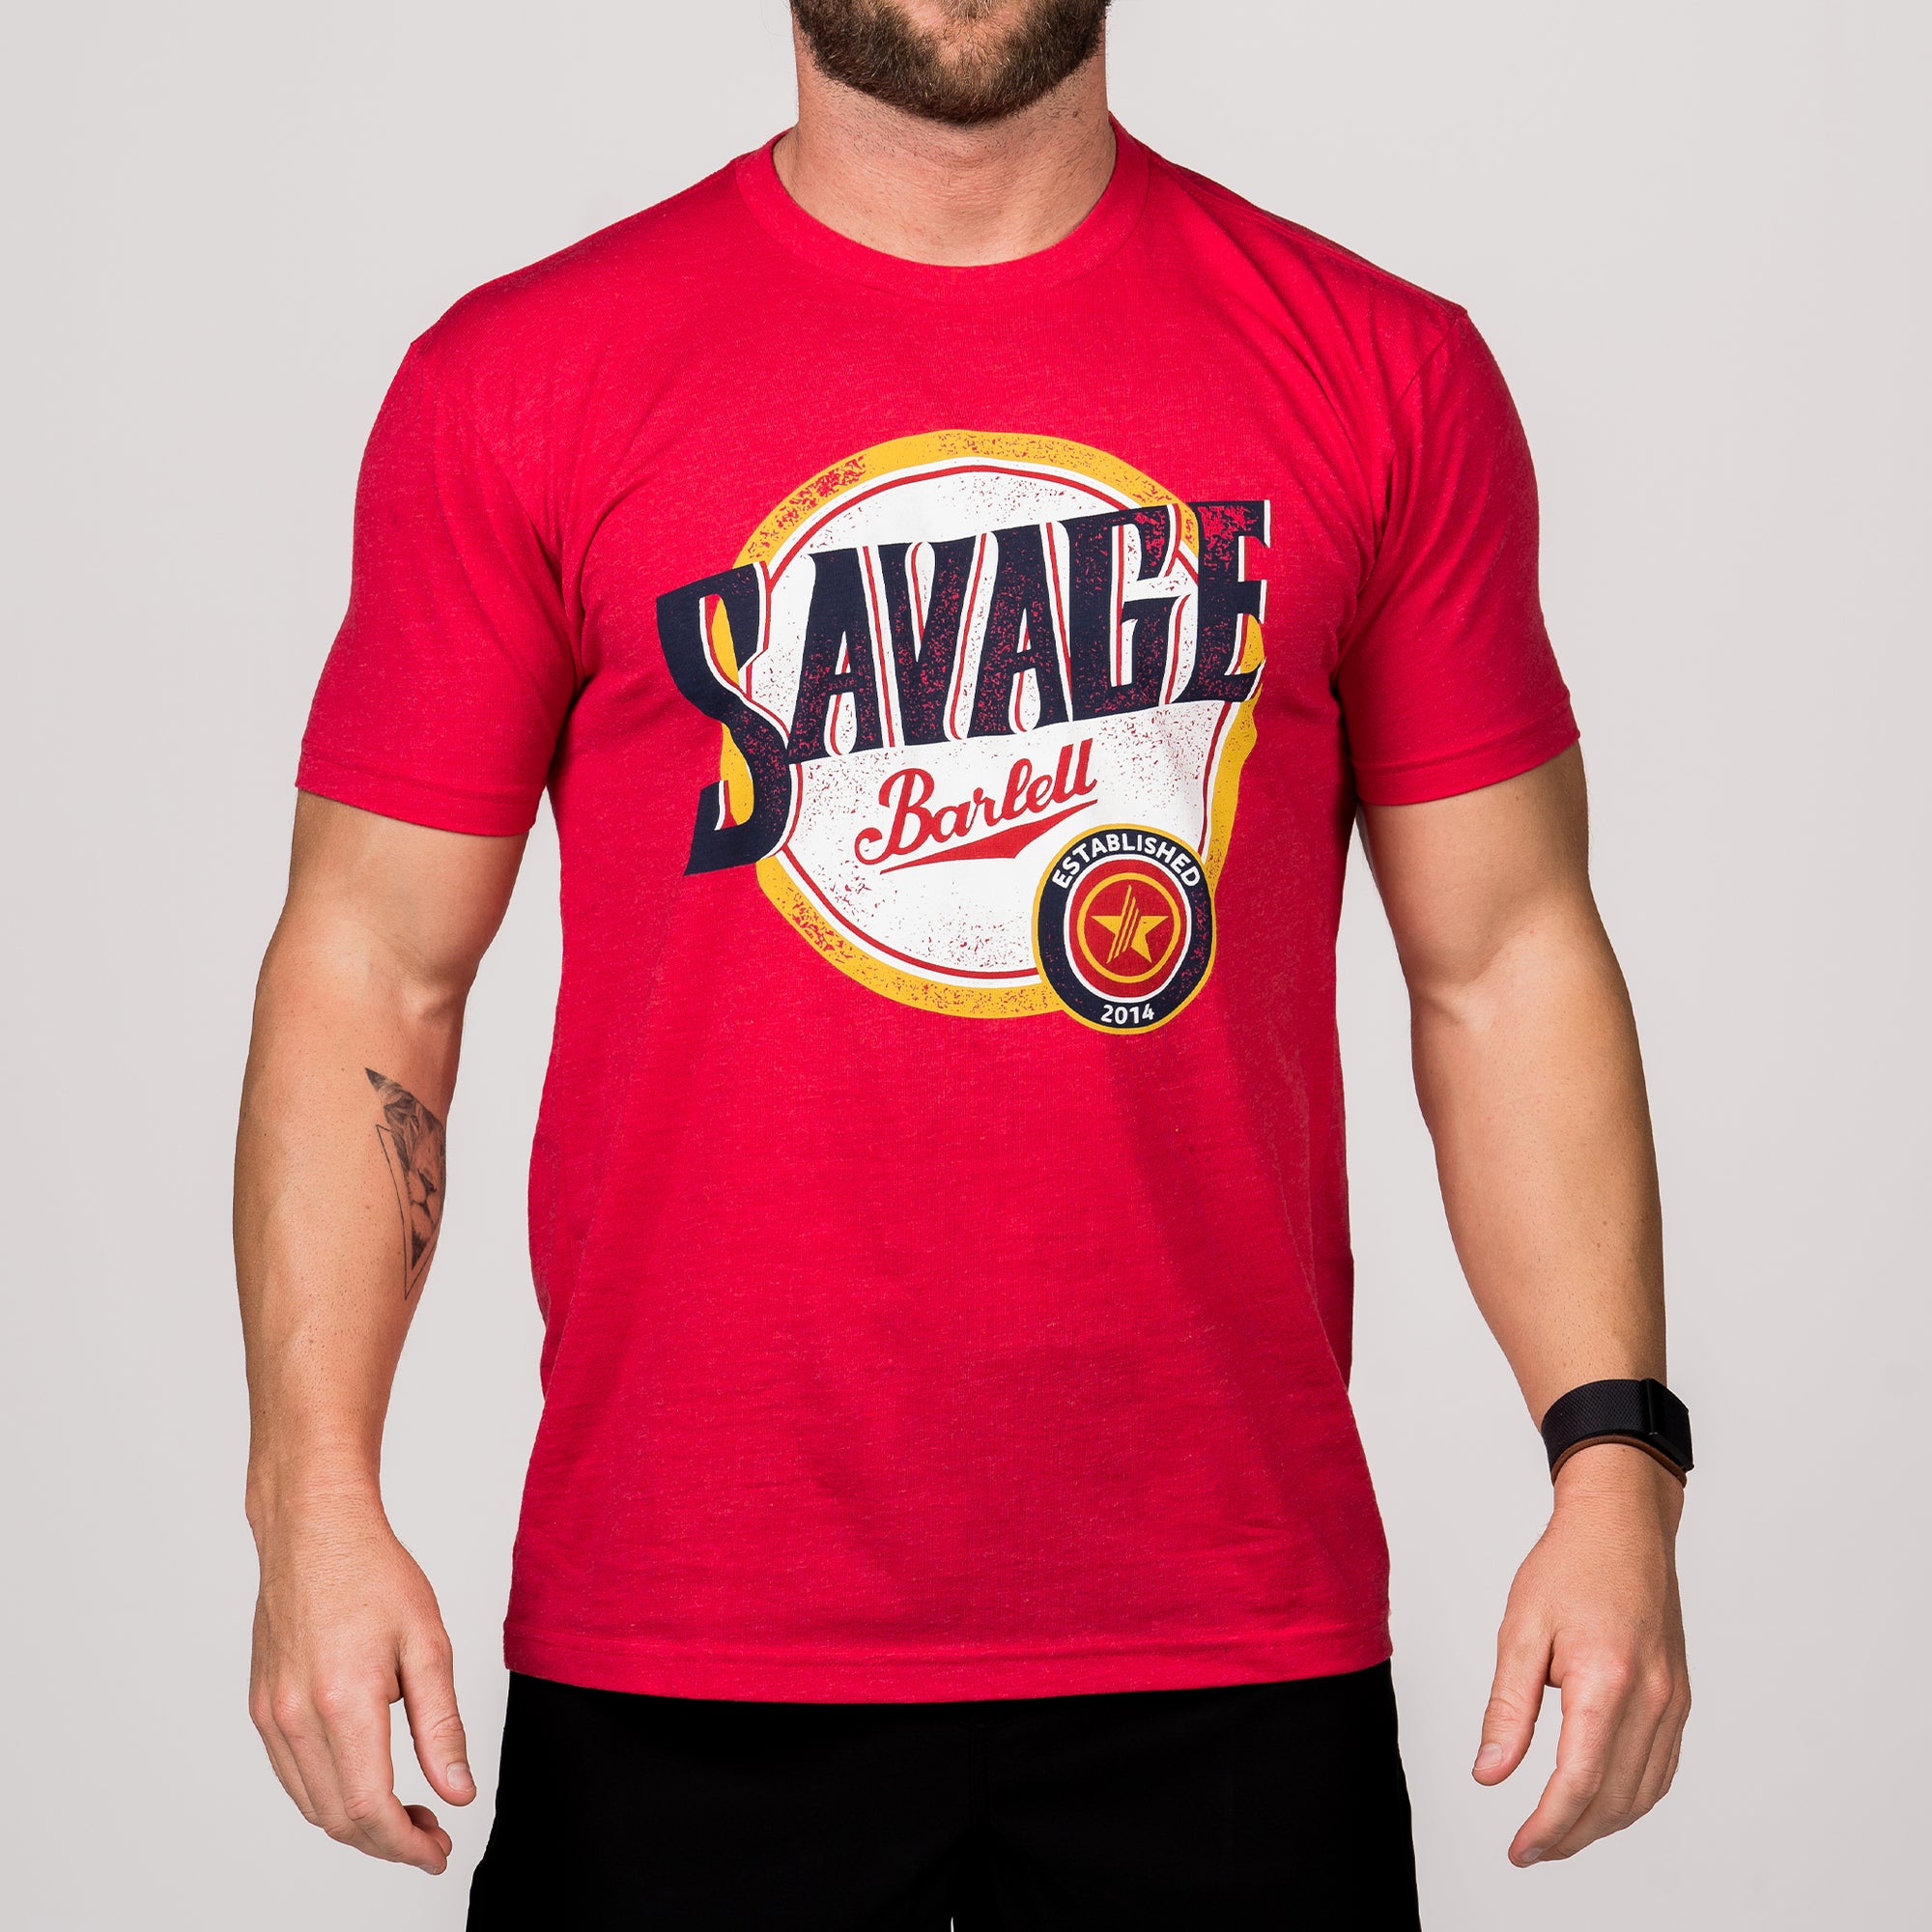 Men's T-Shirt - Savage Time - Savage Barbell Apparel